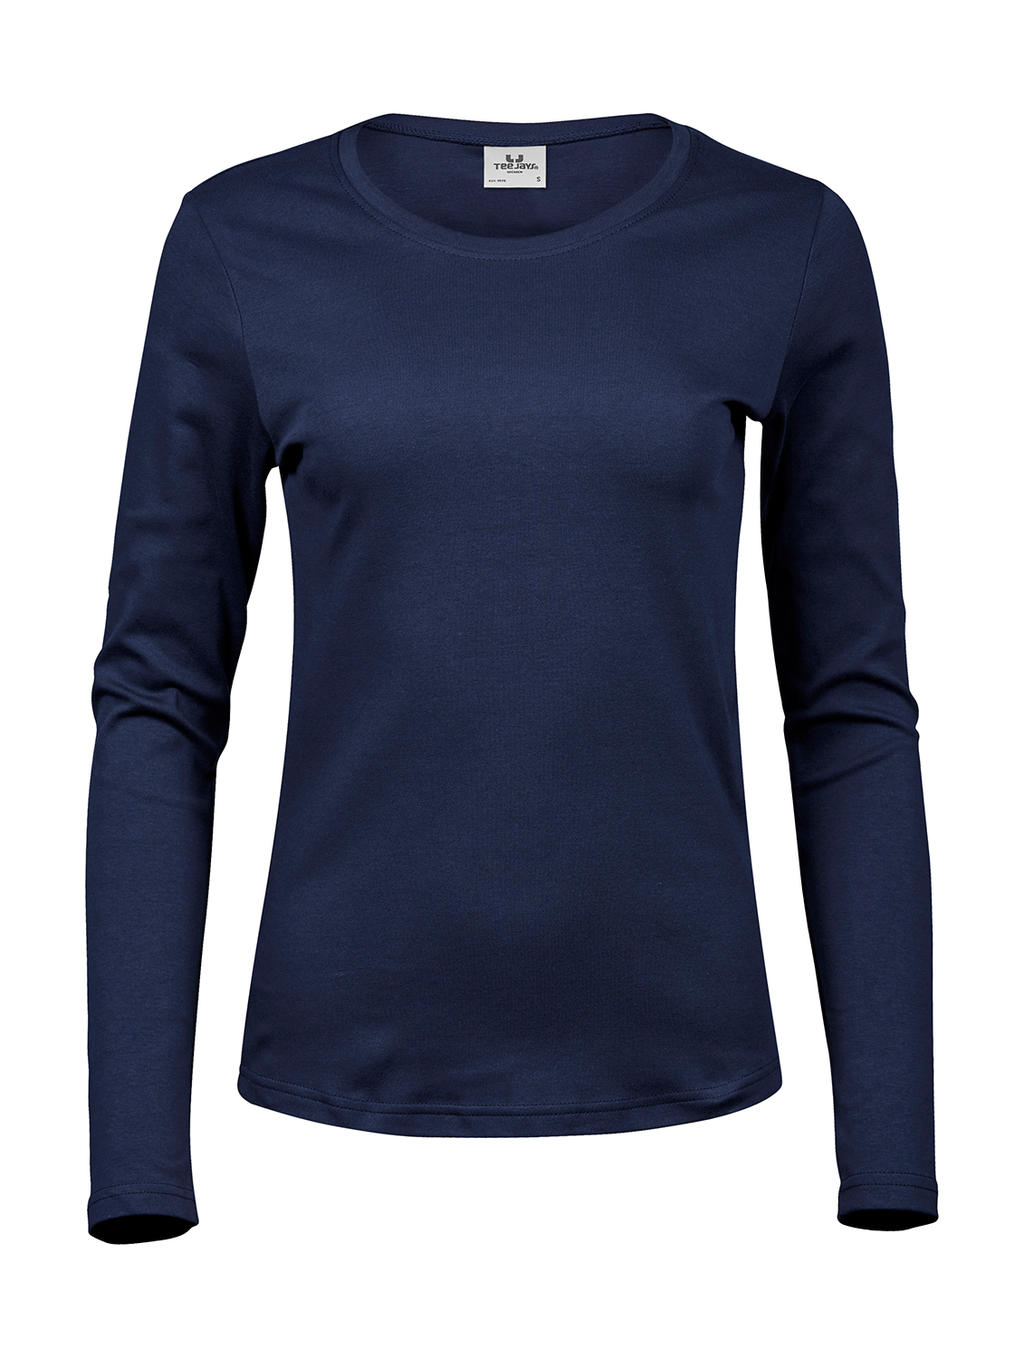  Ladies LS Interlock T-Shirt in Farbe Navy